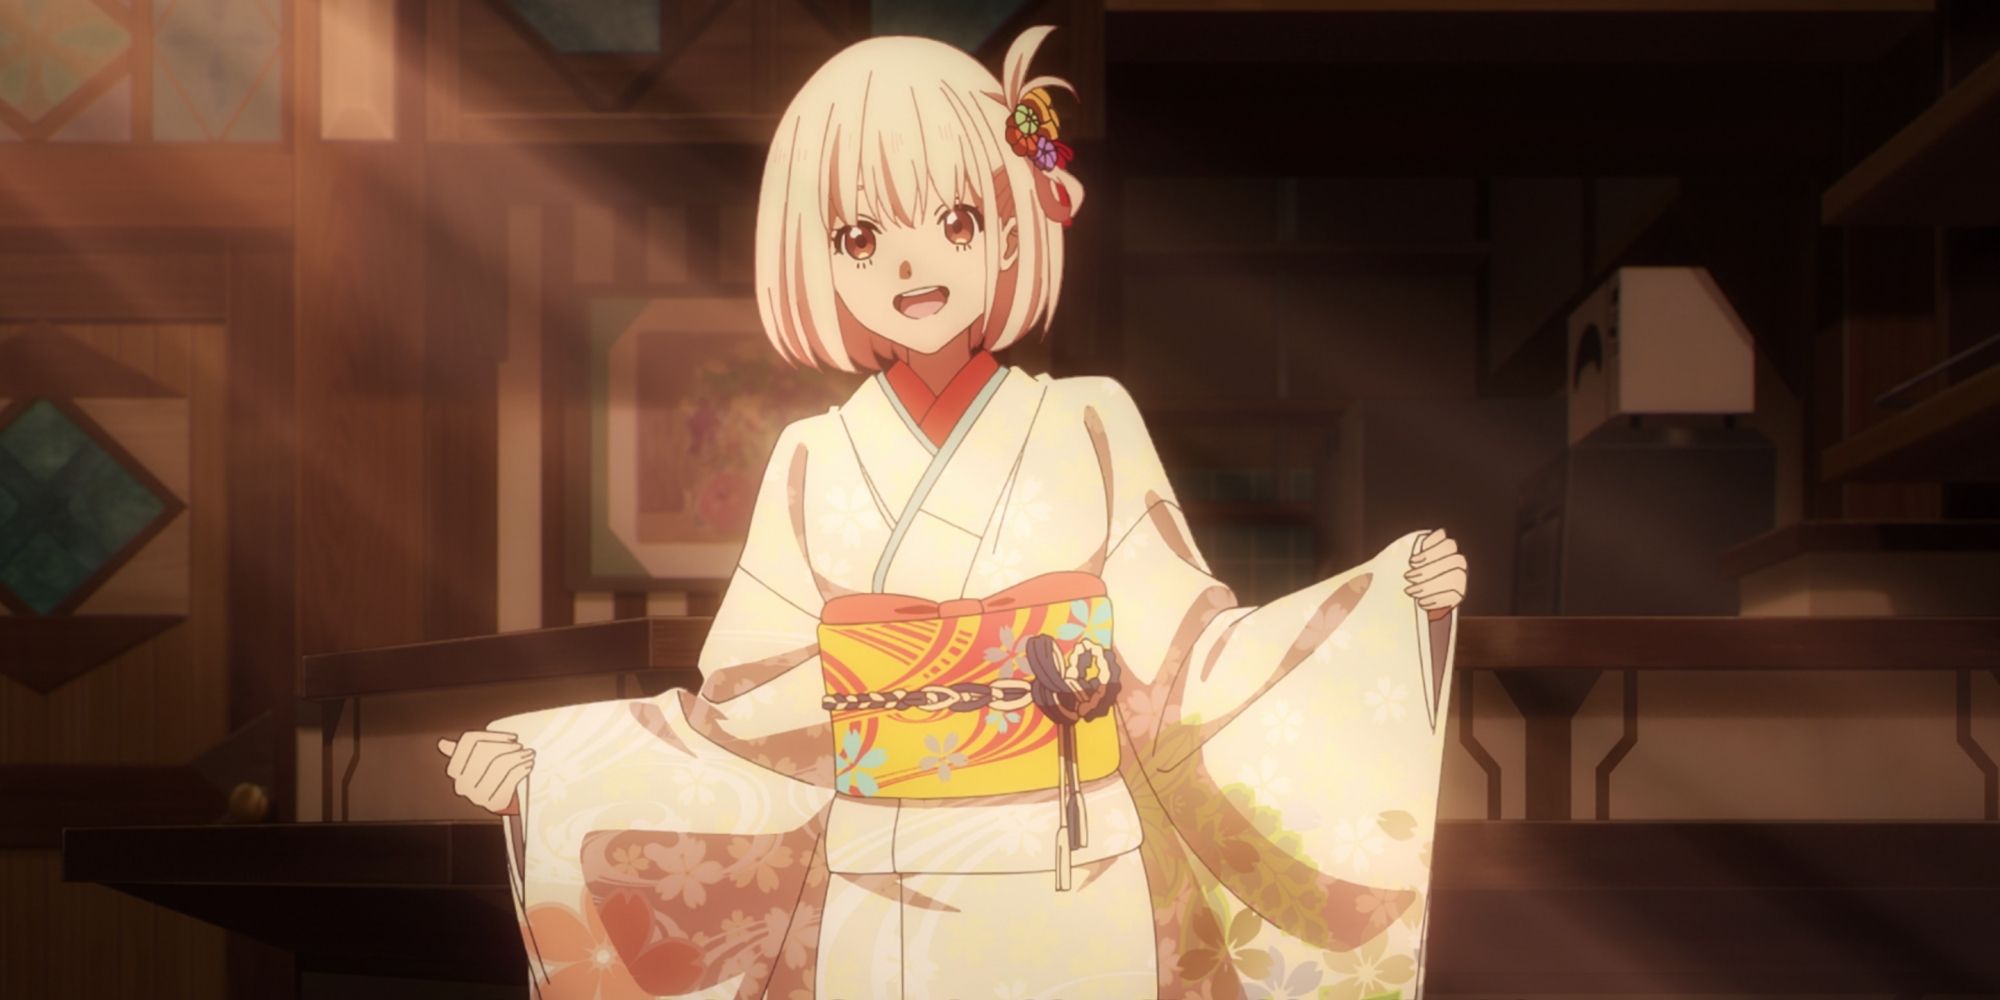 Chisato montre son kimono dans Lycoris Recoil.